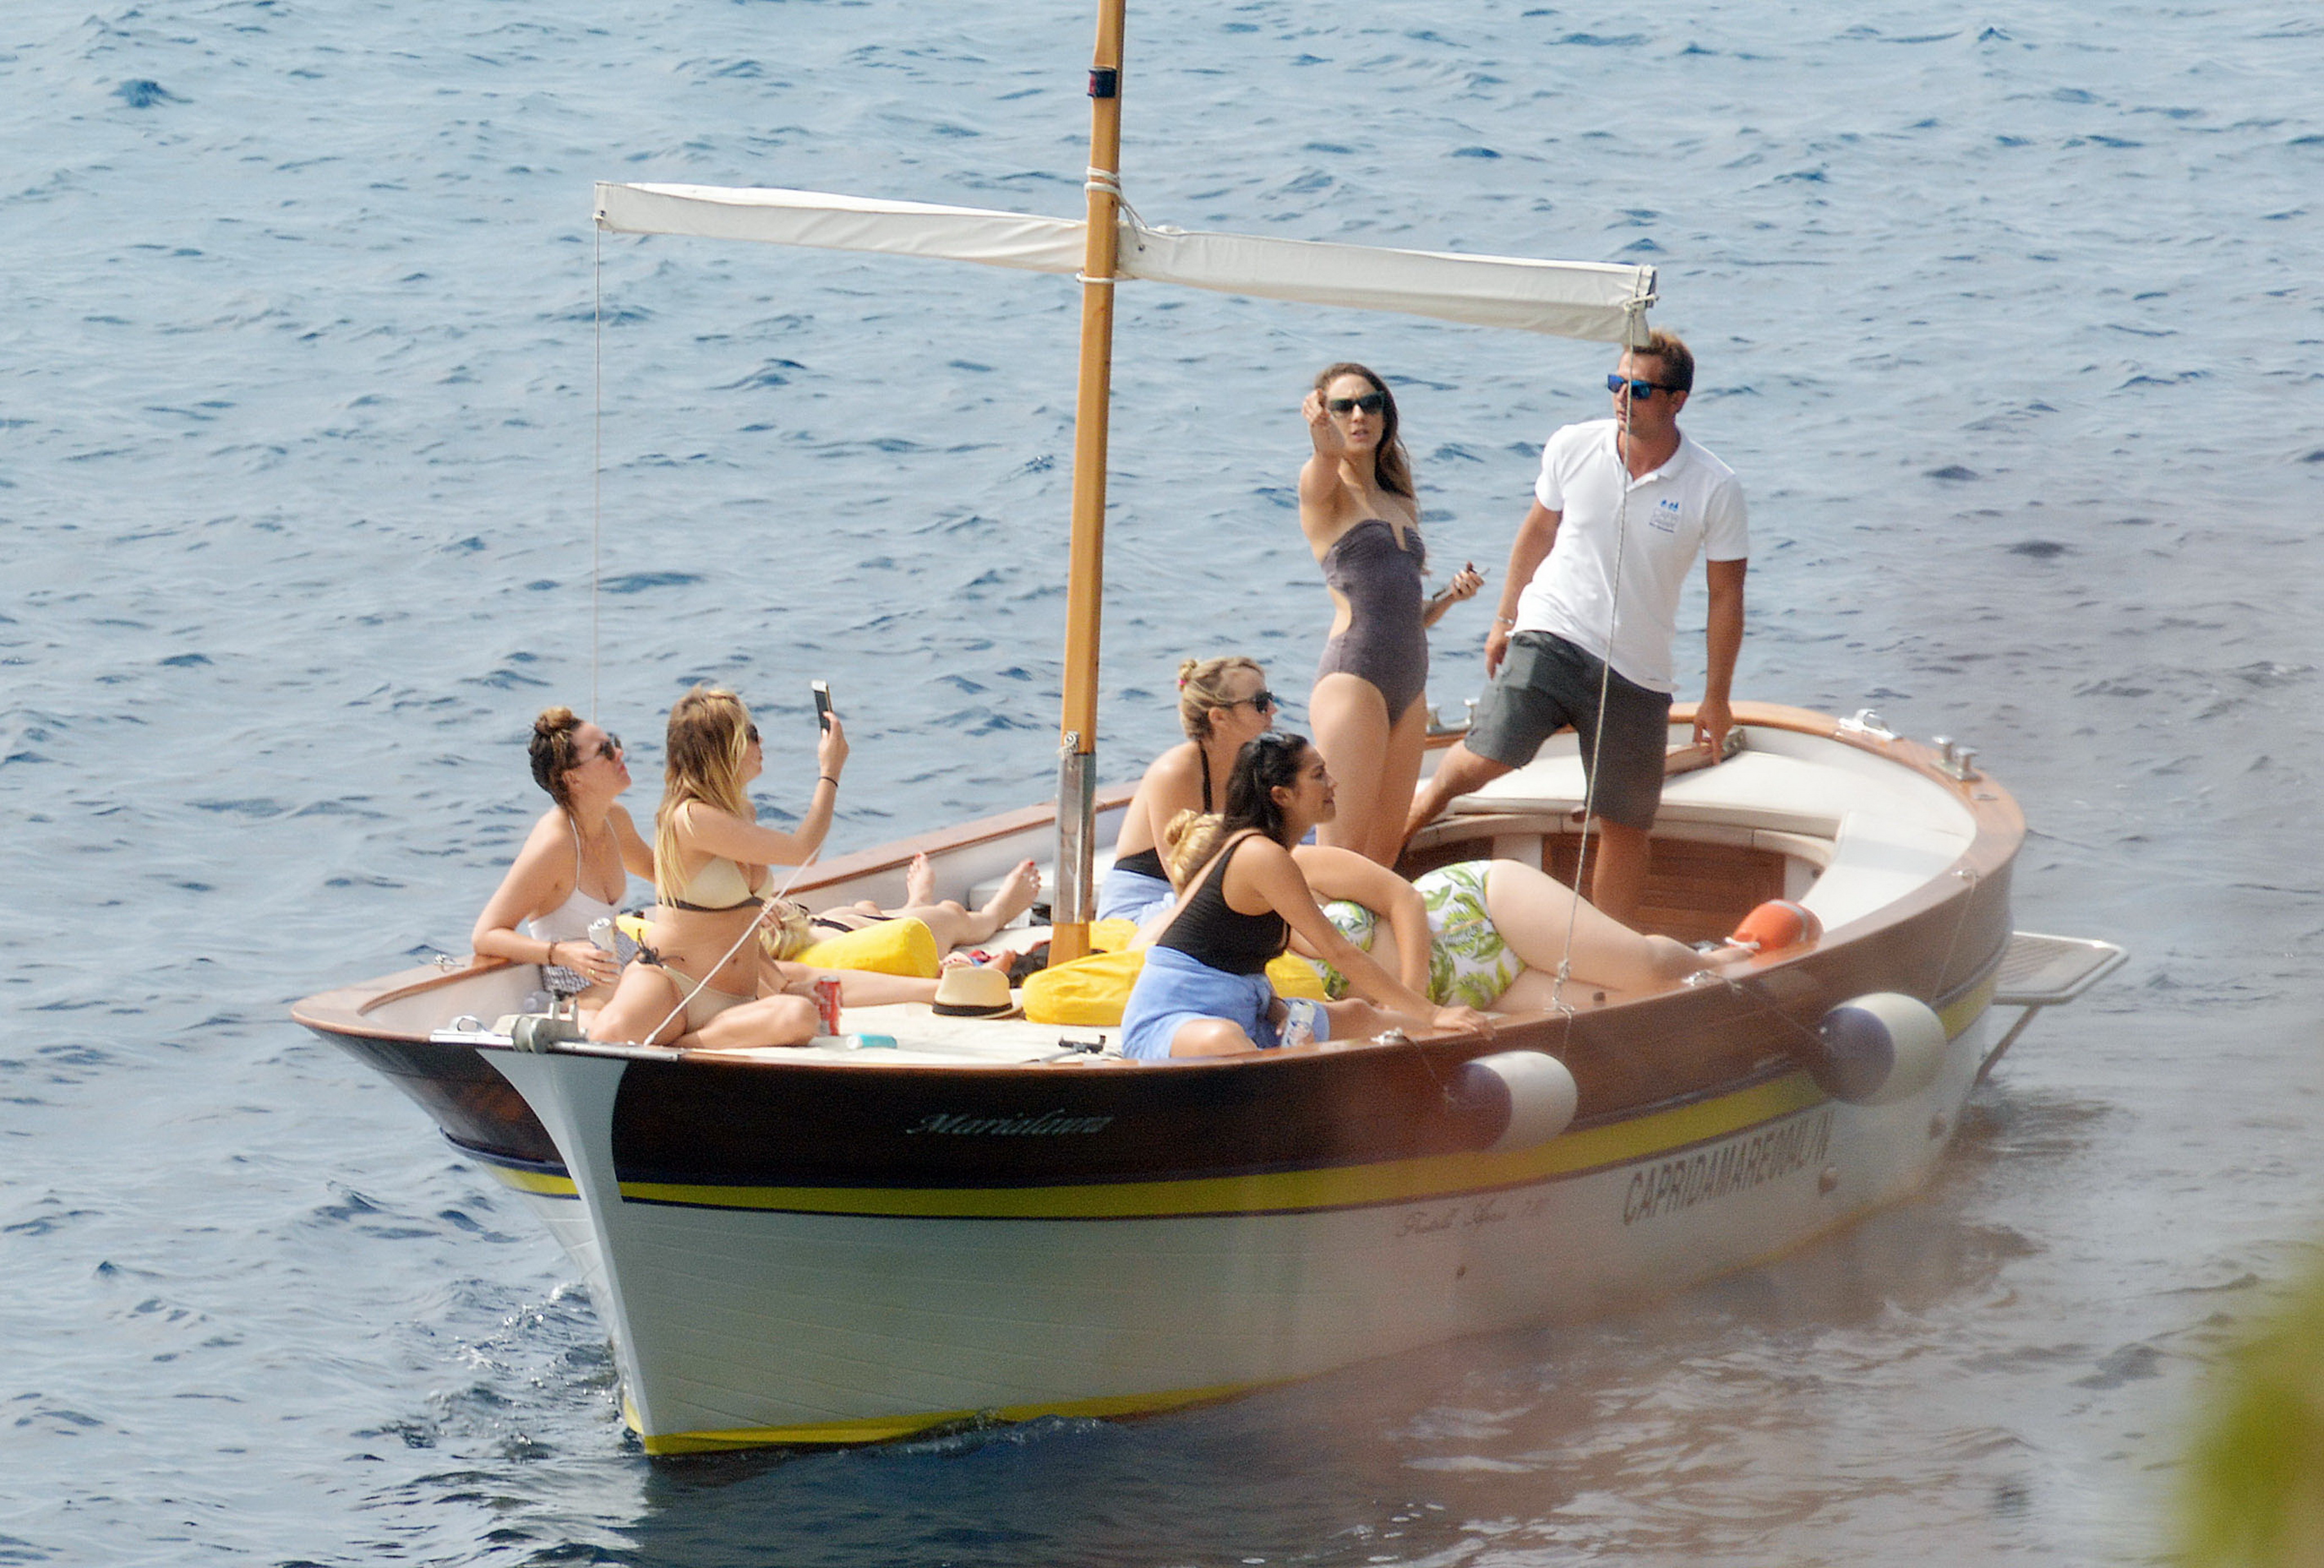 Ashley Benson, Shay Mitchell & Troian Bellisario sexy bikinis and swimsuits candids on the yacht in Capri 37x HQ photos 23.jpg